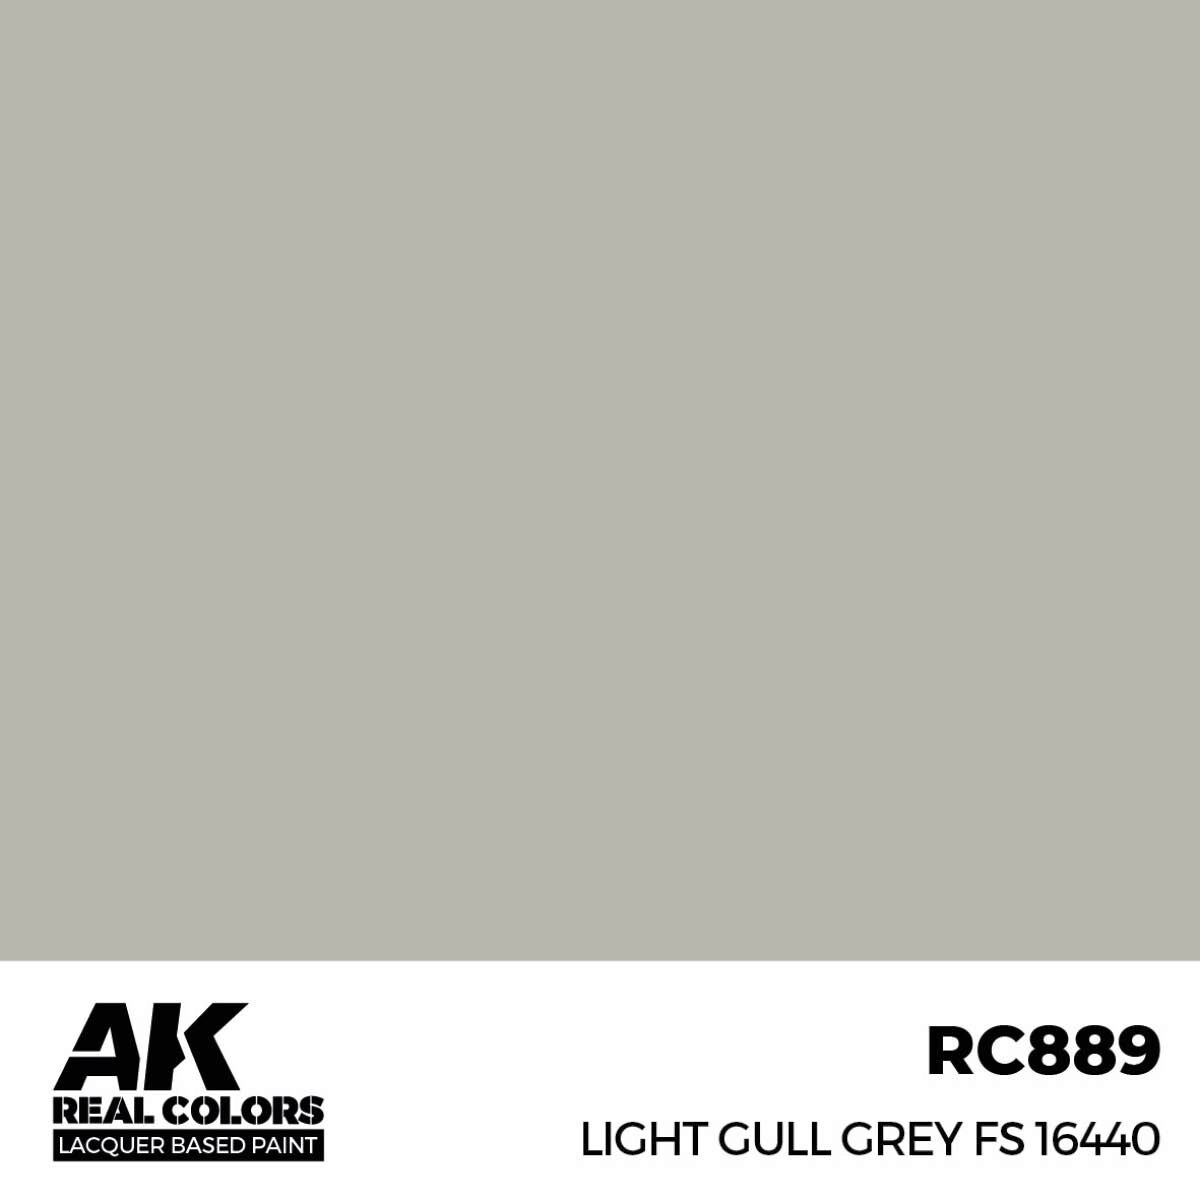 AK RC889 Real Colors Light Gull Grey FS 16440 17 ml.